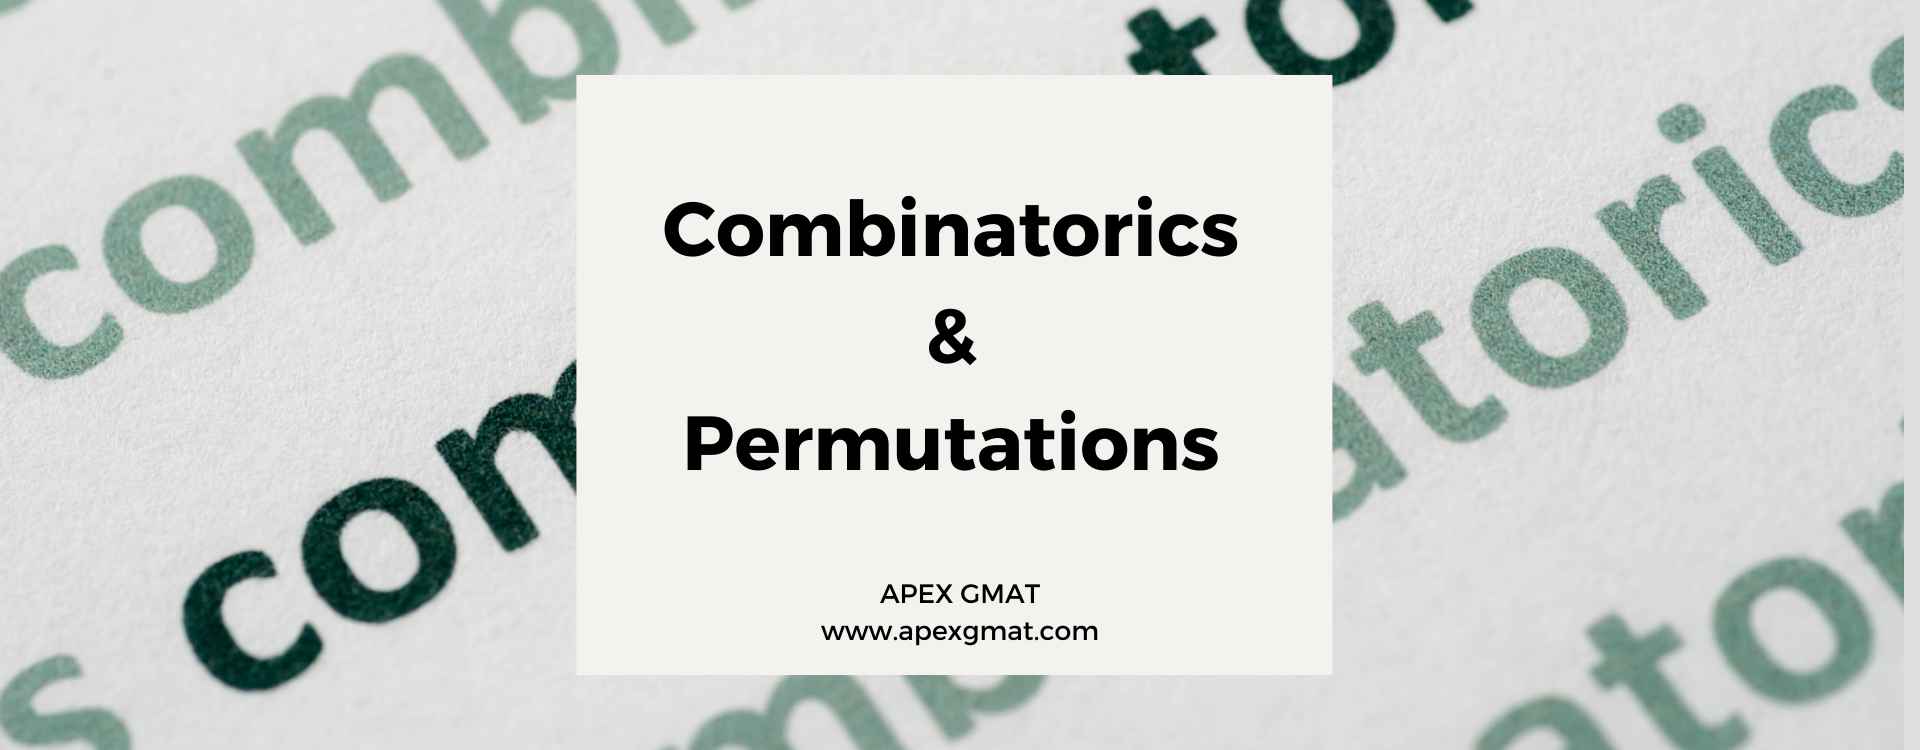 Introduction to Combinatorics & Permutations